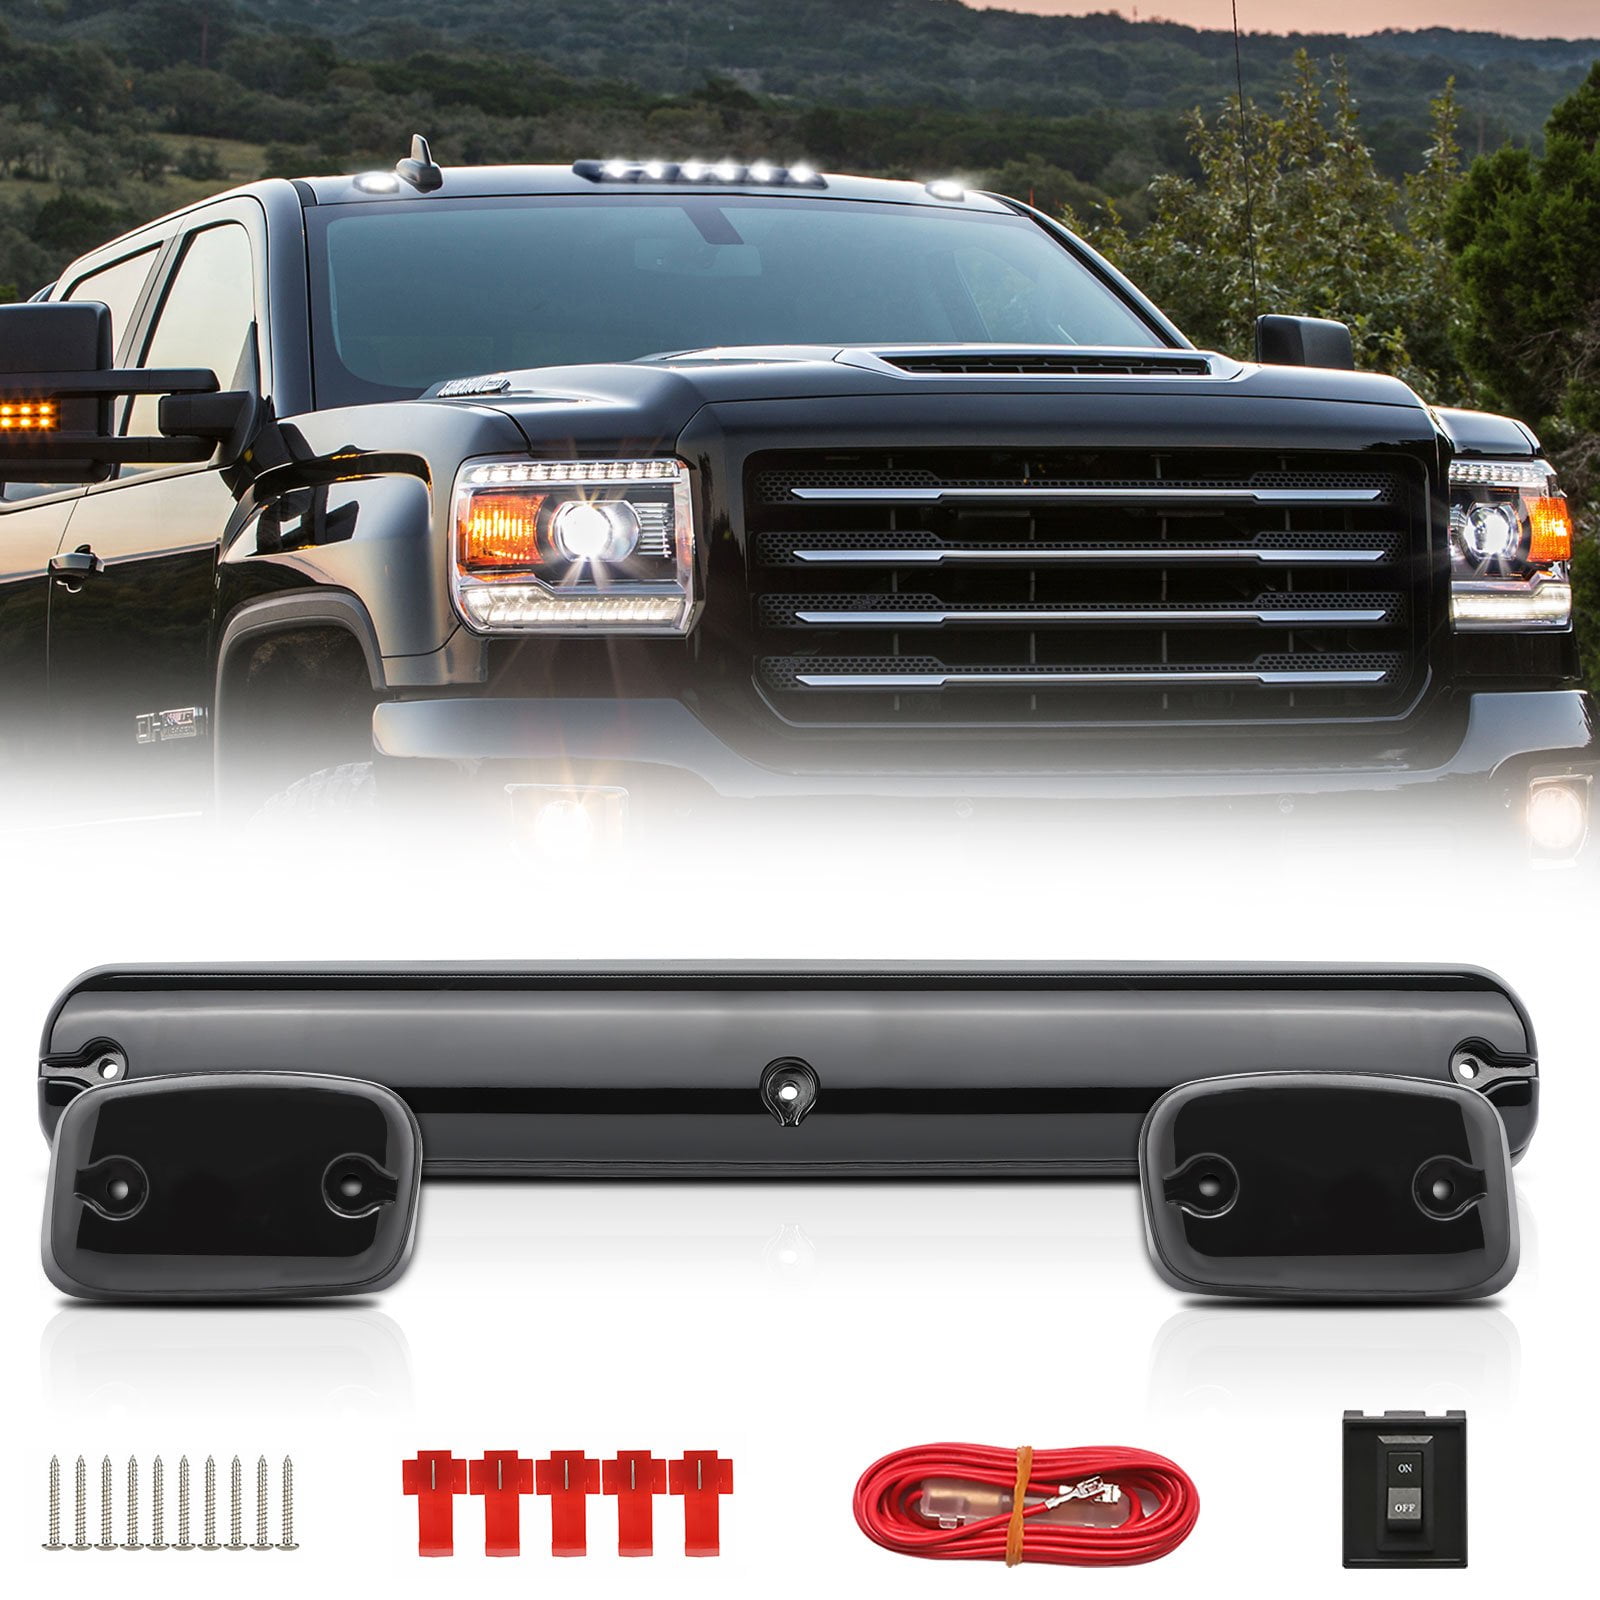 Amexmart 5X Amber Led Smoke Cab Roof Running Top Marker Lights Compatible for Dodge Ram 1500 2500 3500 4500 5500 2003-2018 Pickup Trucks 